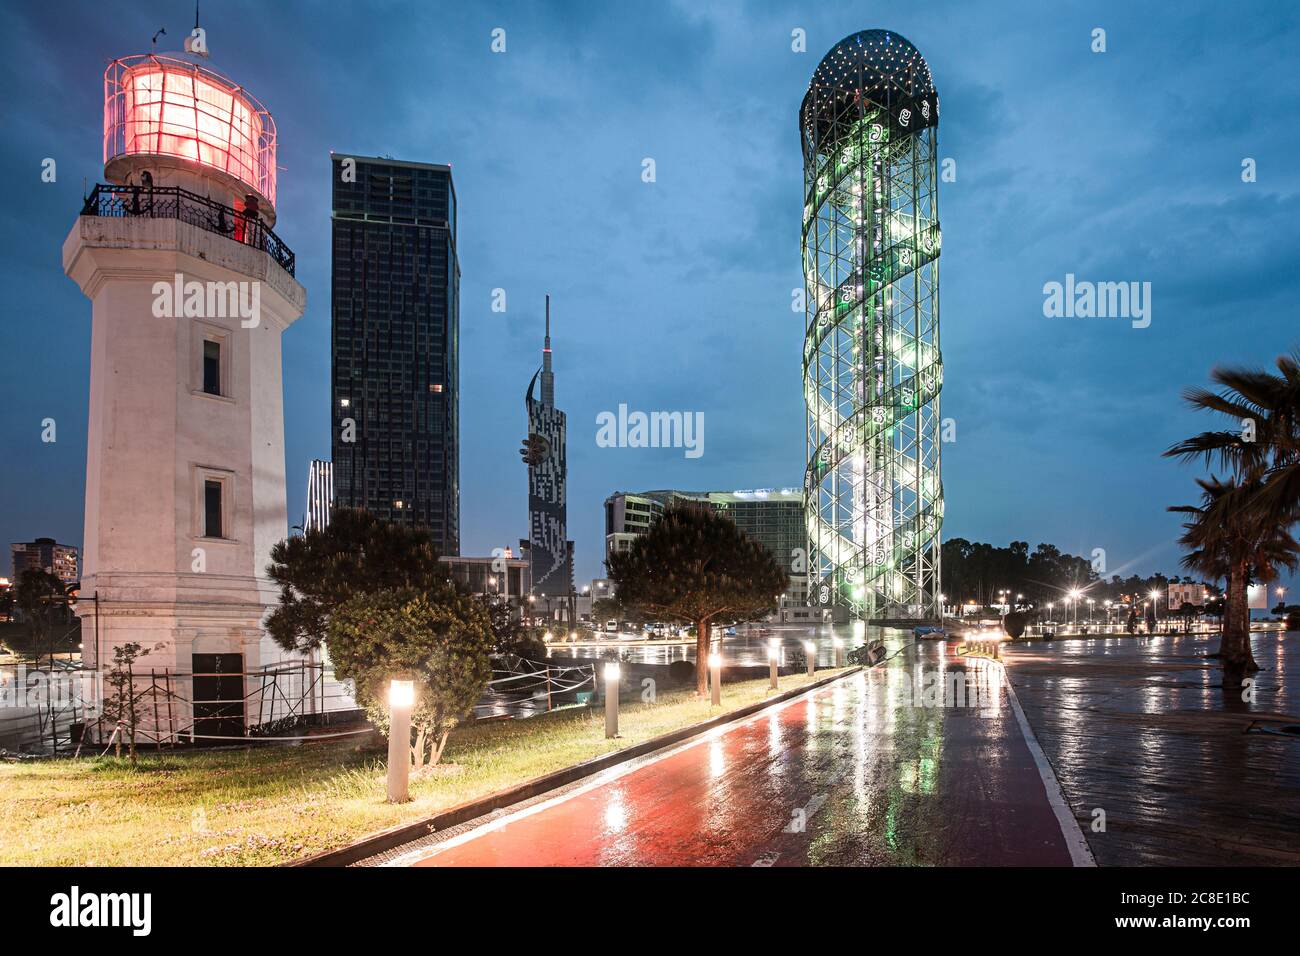 Georgia, Adjara, Batumi, Road in front of illuminated Batumi Lighthouse and Alphabetic Tower at dusk Stock Photo